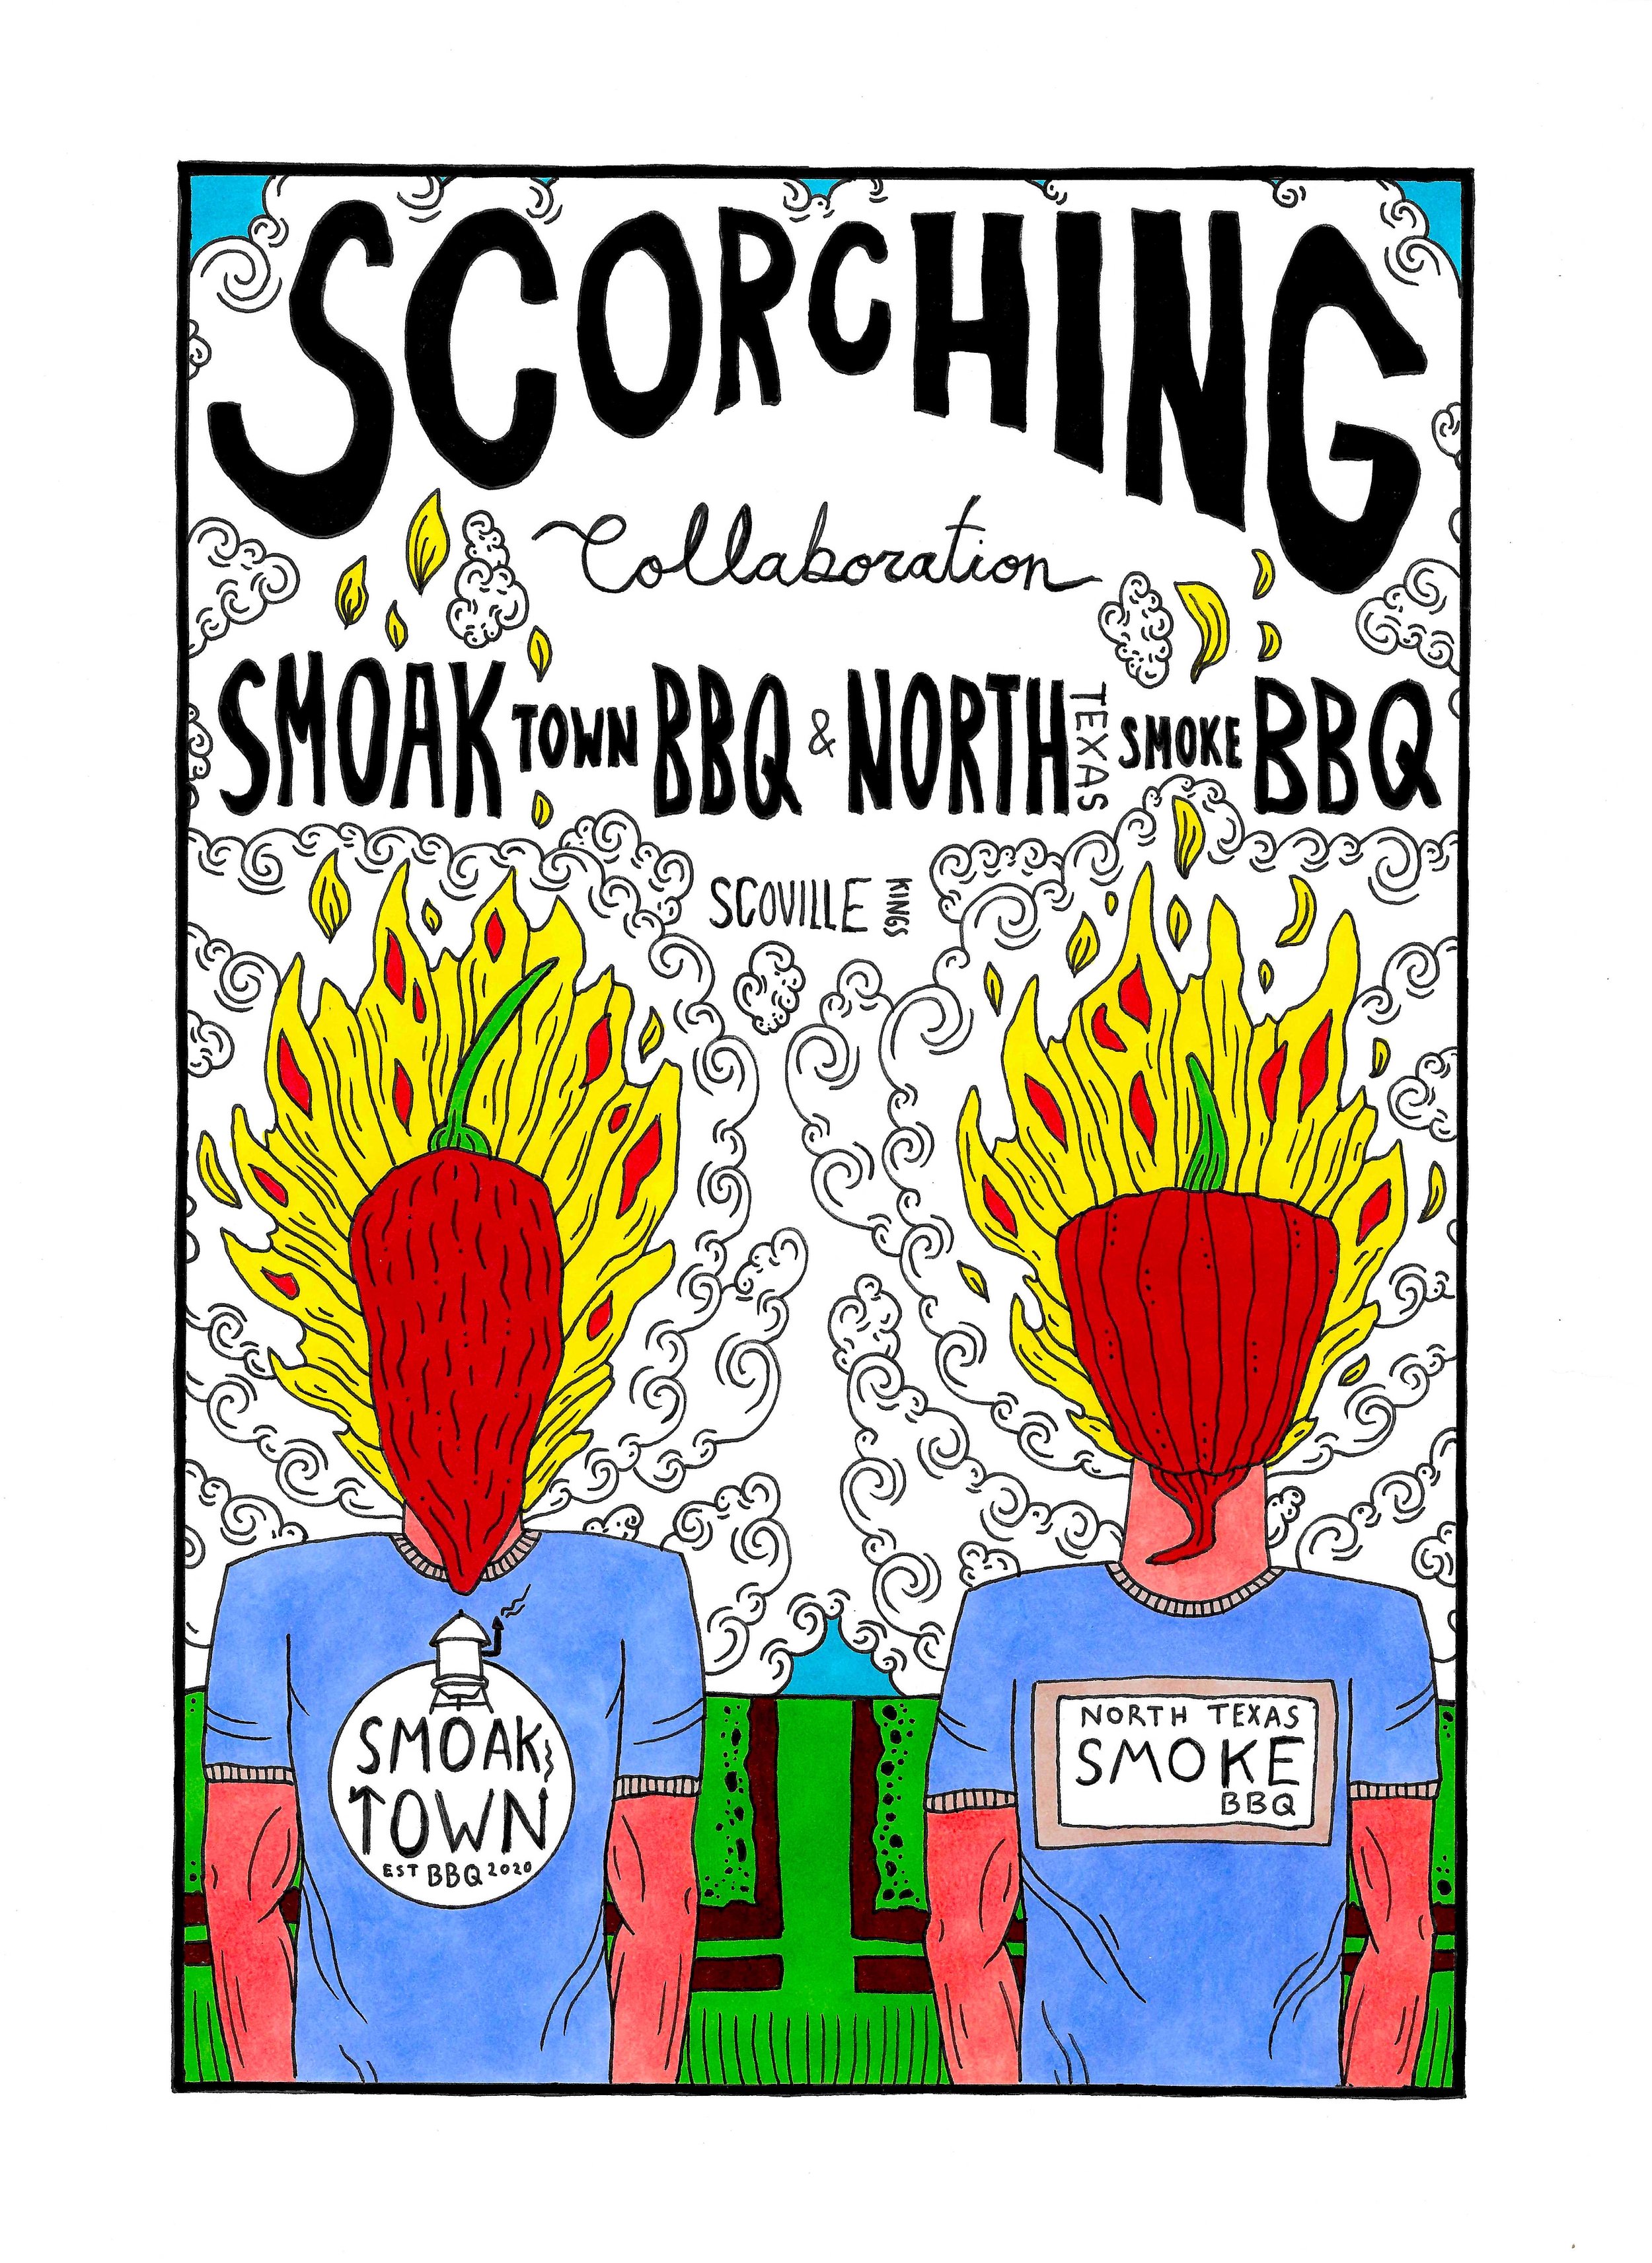 Smoak Town BBQ & North Texas Smoke BBQ "Scorching" Event Poster